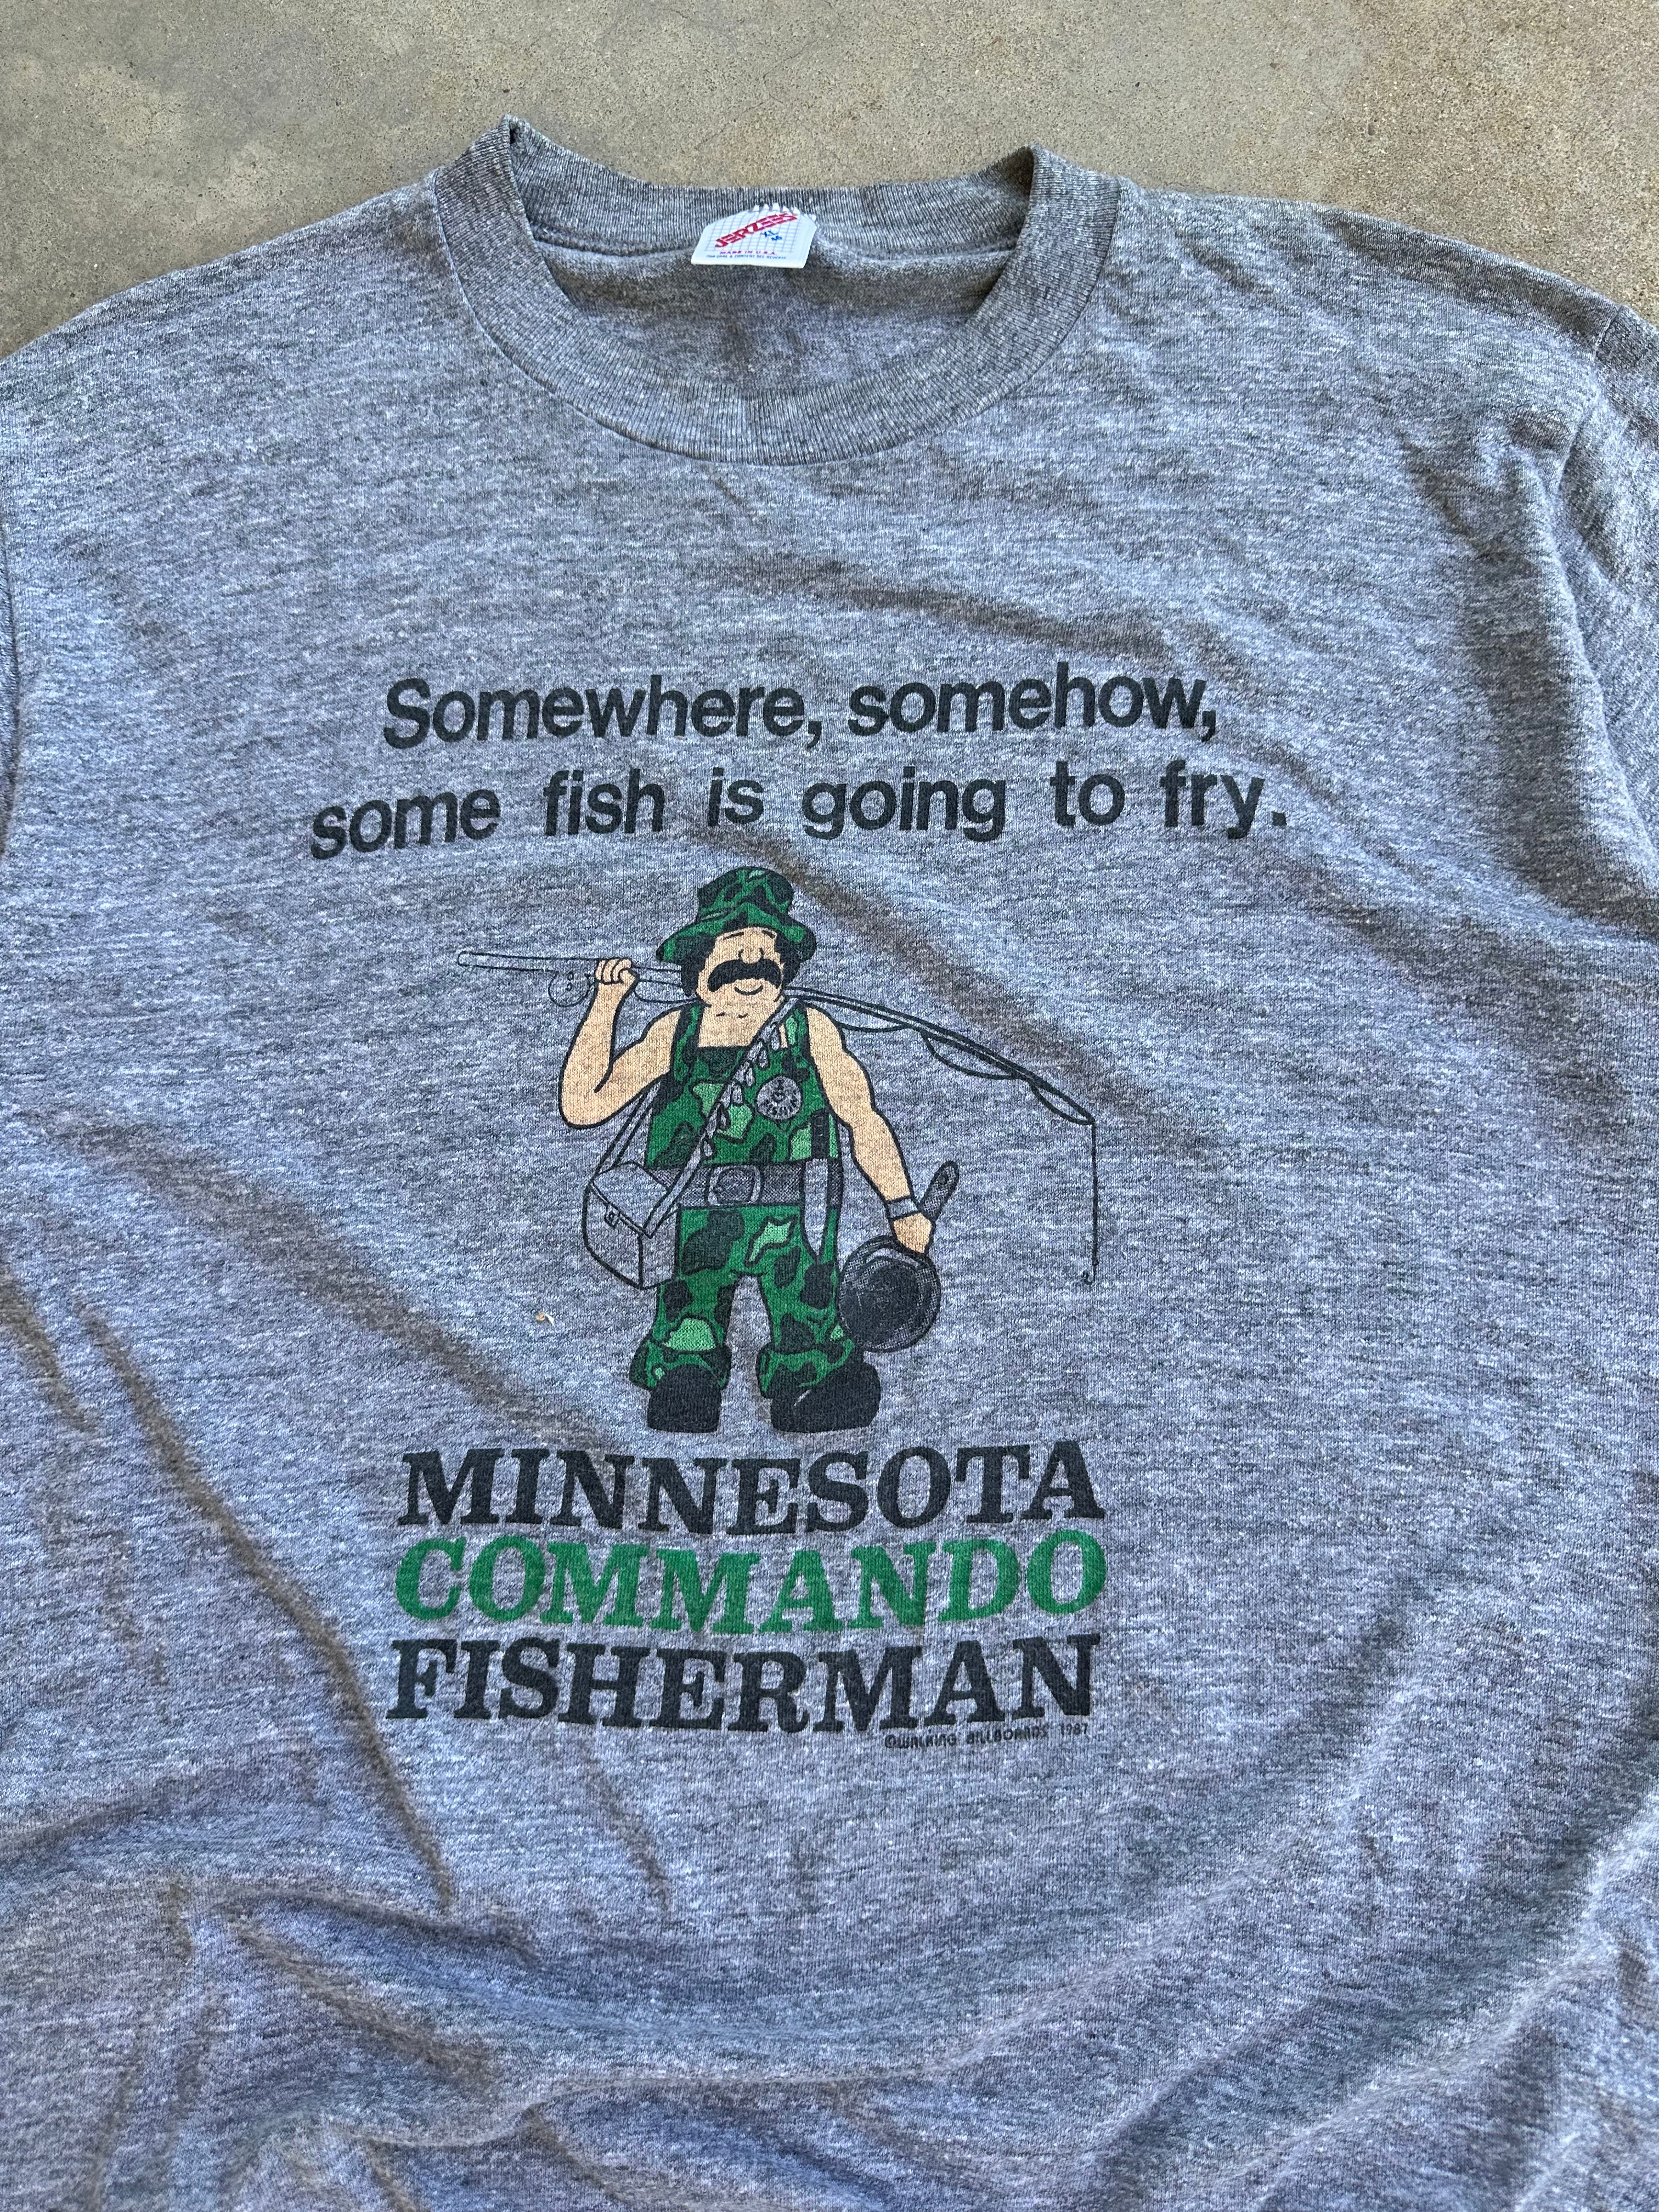 1987 Minnesota Commando Fisherman T-Shirt (L)